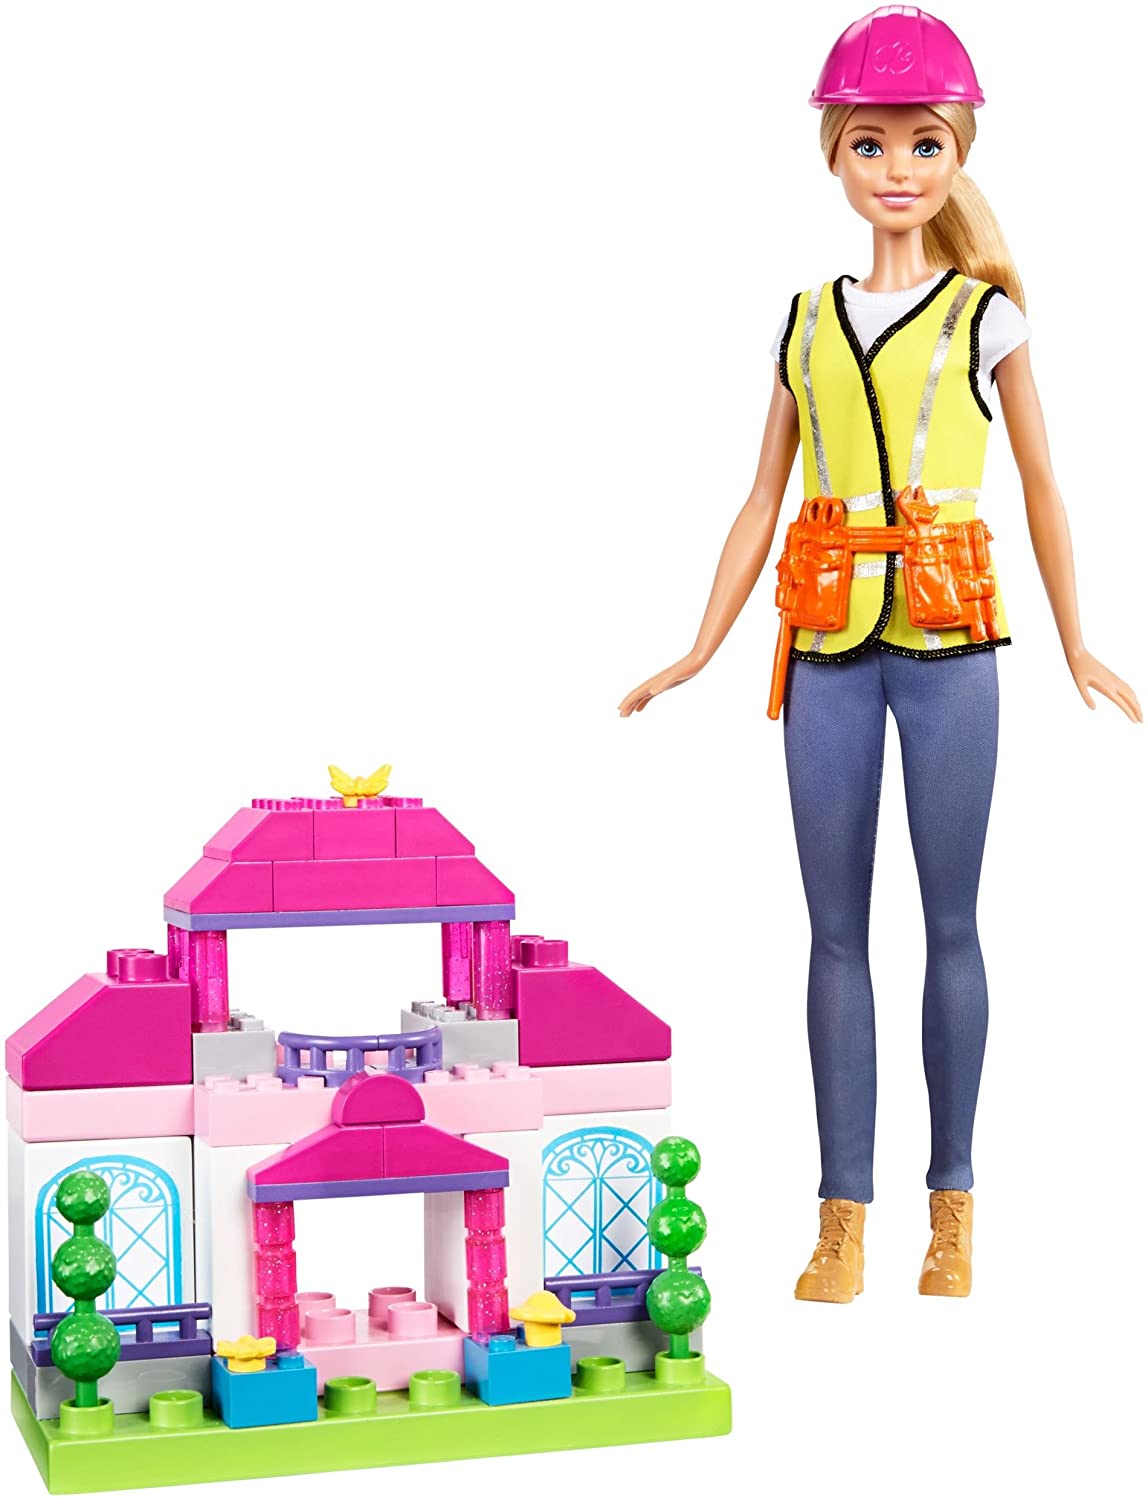 Barbie Builder Doll with Mega Bloks Compatibuild Bricks